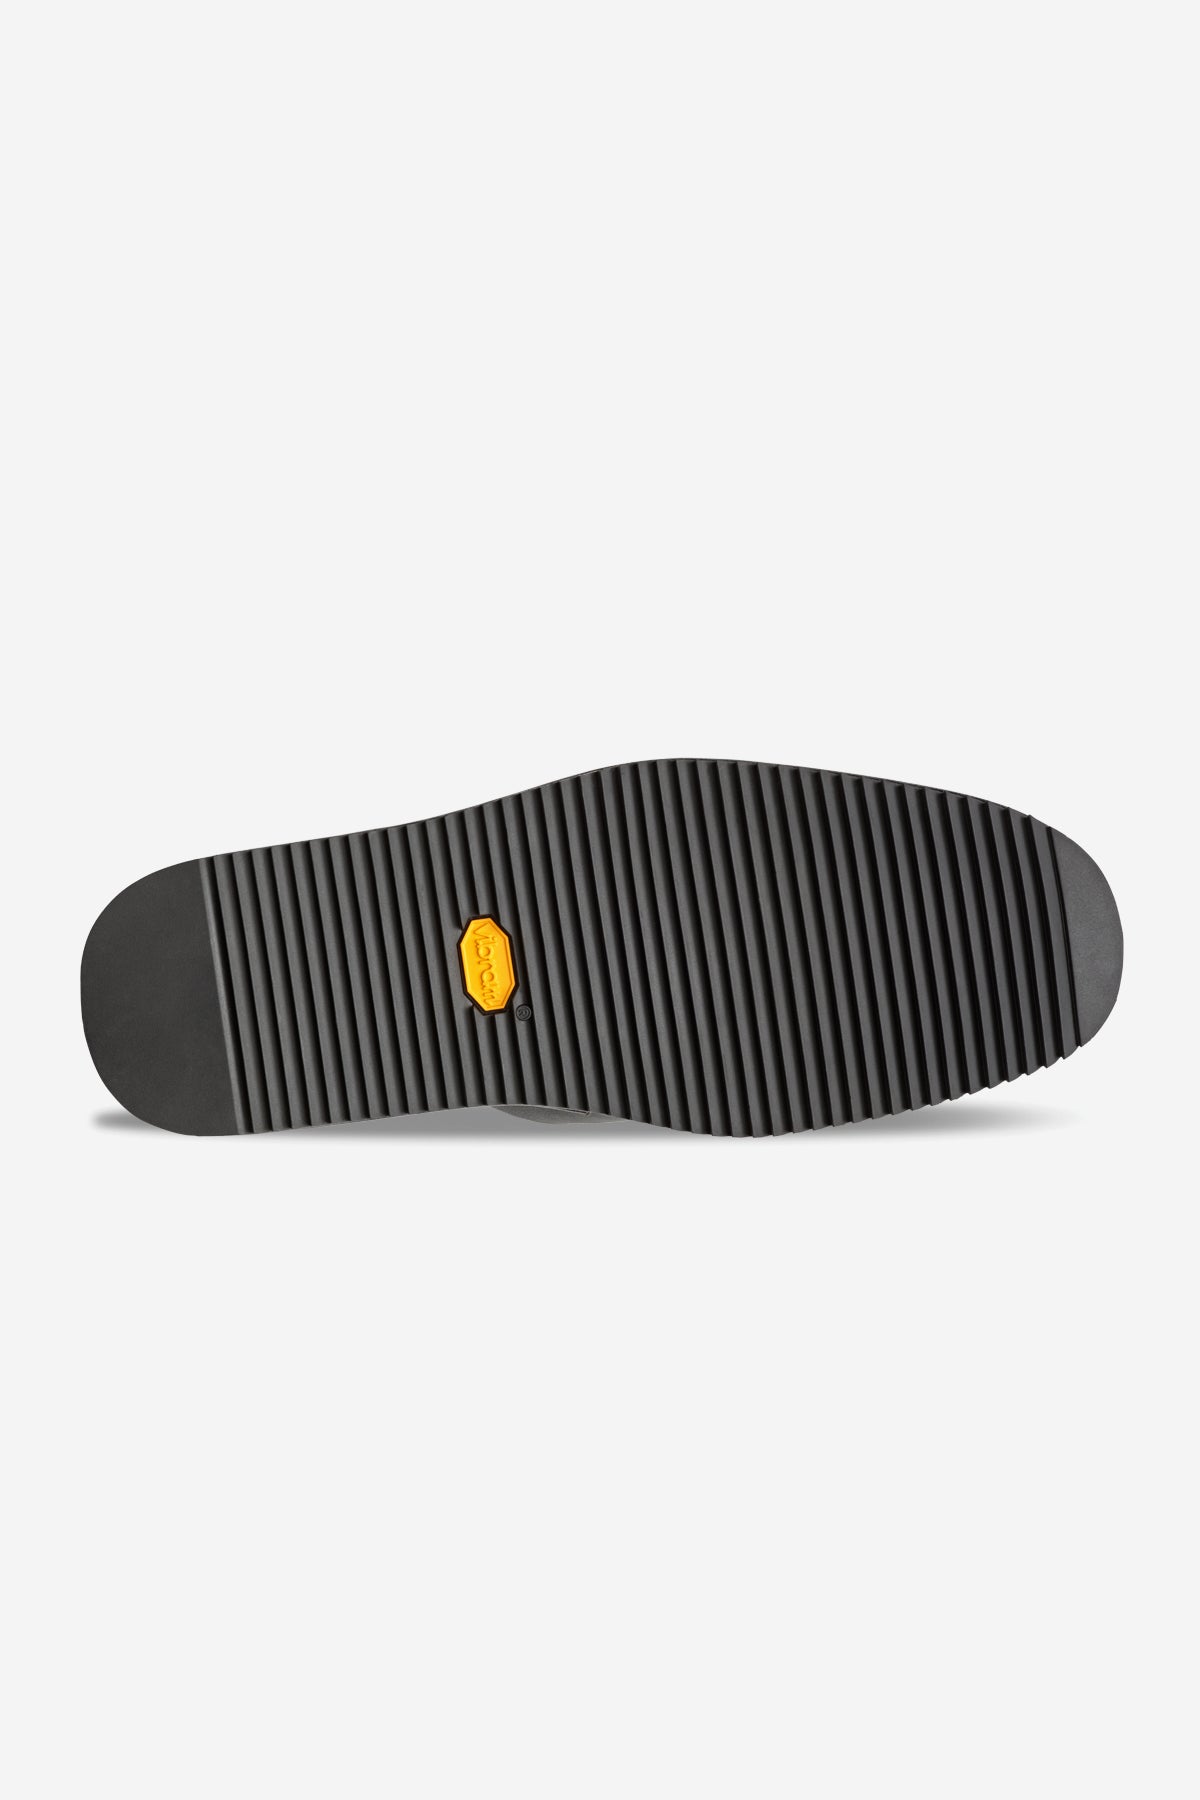 Globe - Mule - Noir/Former - skateboard Chaussures